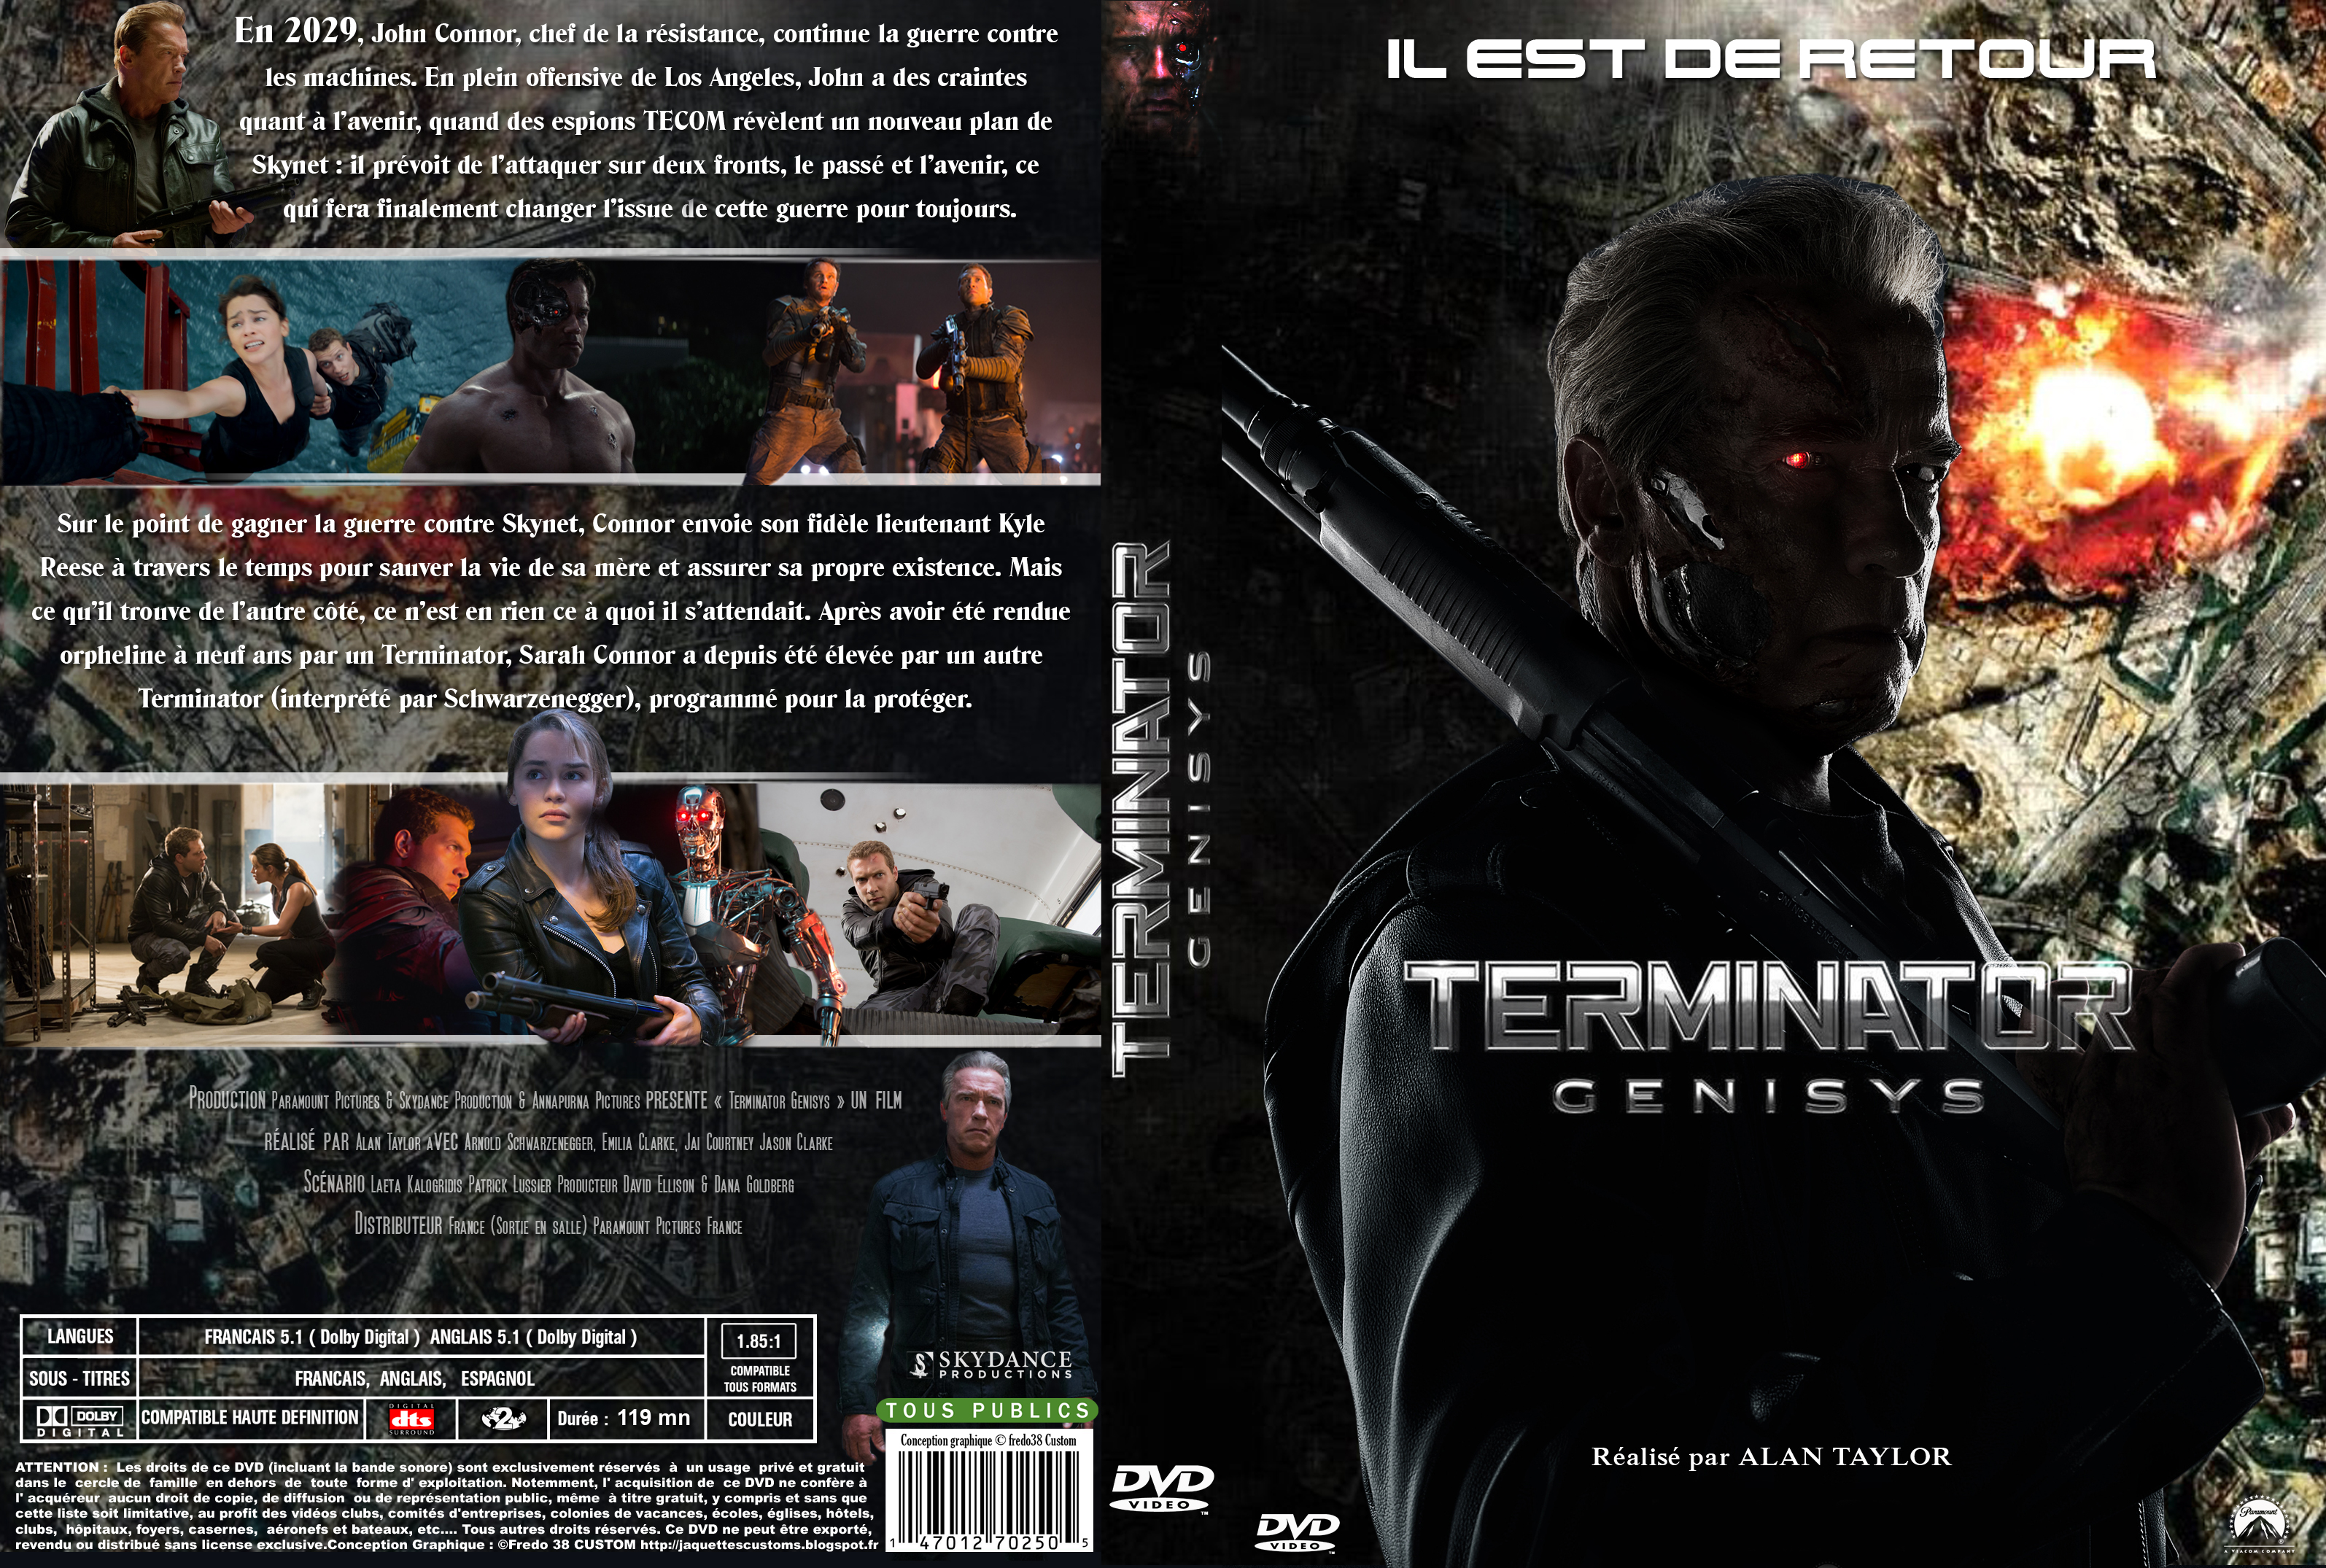 Jaquette DVD Terminator Genisys custom v3